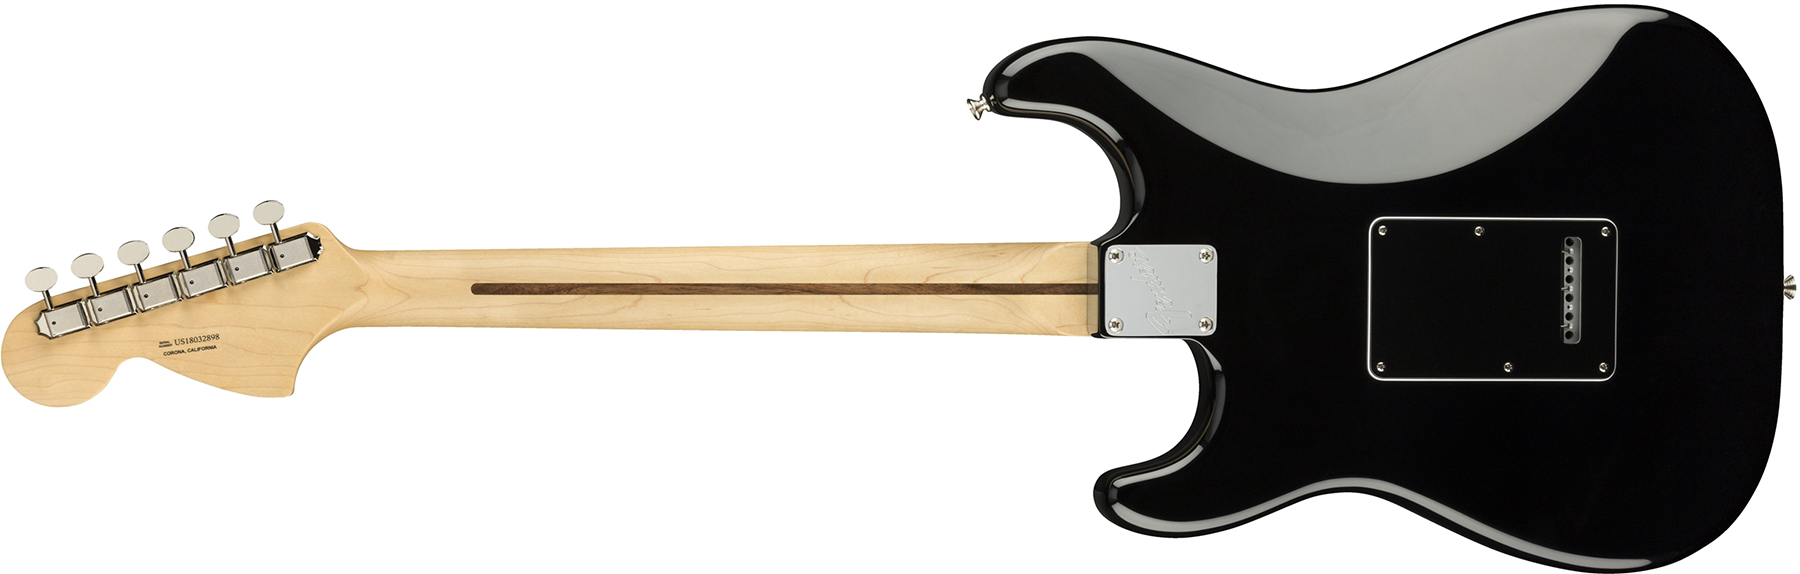 Fender Strat American Performer Usa Hss Mn - Black - Guitarra eléctrica con forma de str. - Variation 1